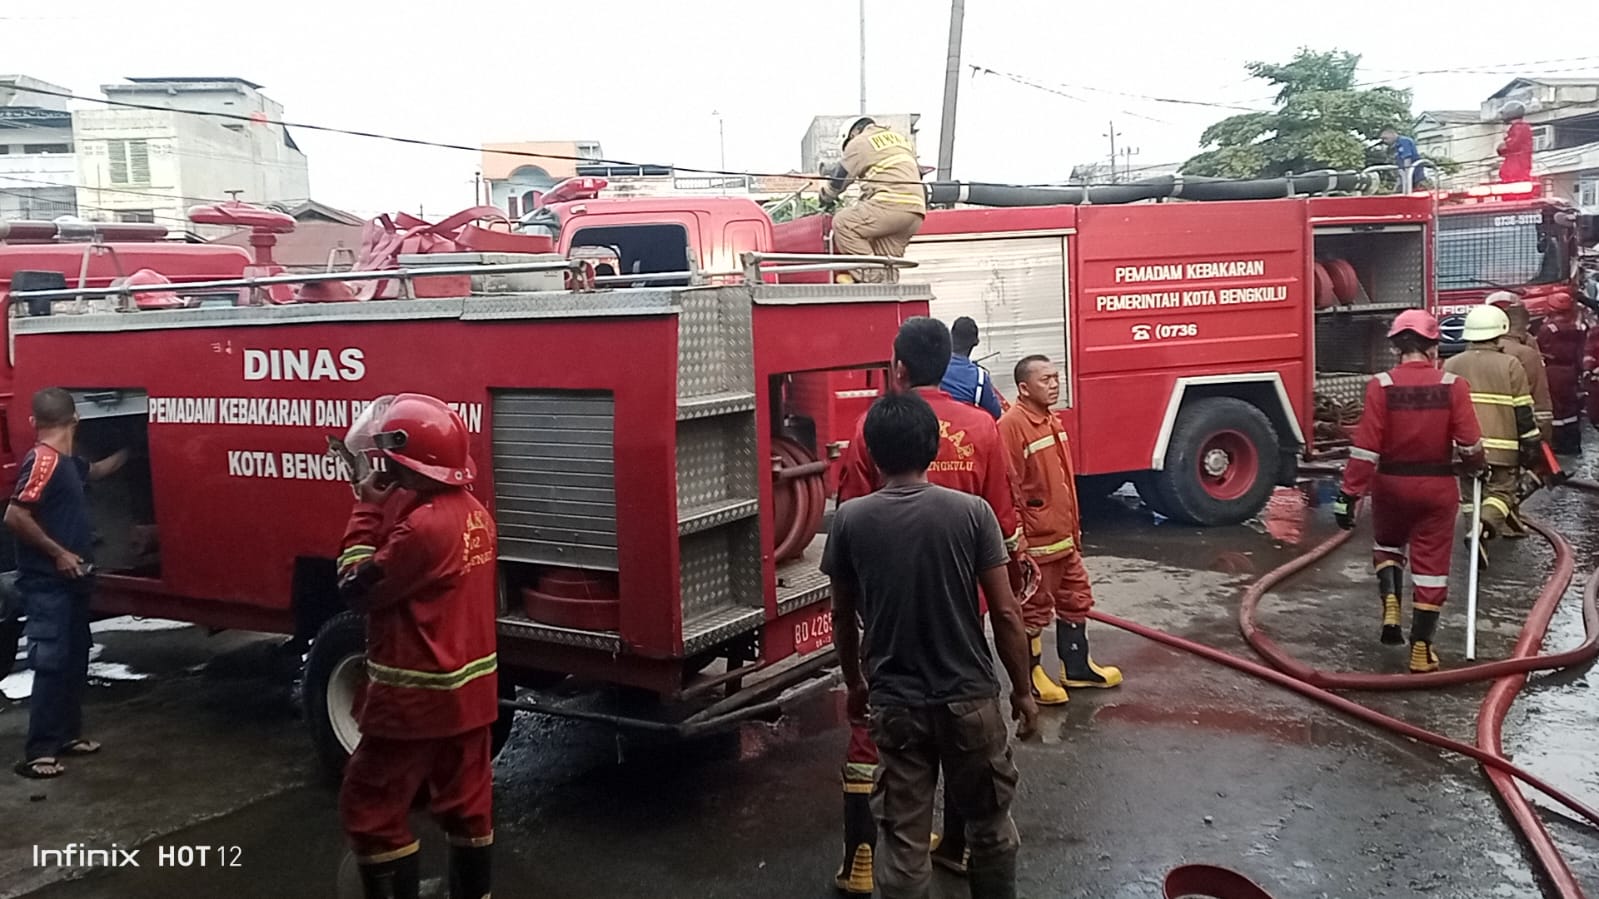 Toko 'Barang Batam' di Pasar Panorama Terbakar, Diduga Karena Korsleting Listrik